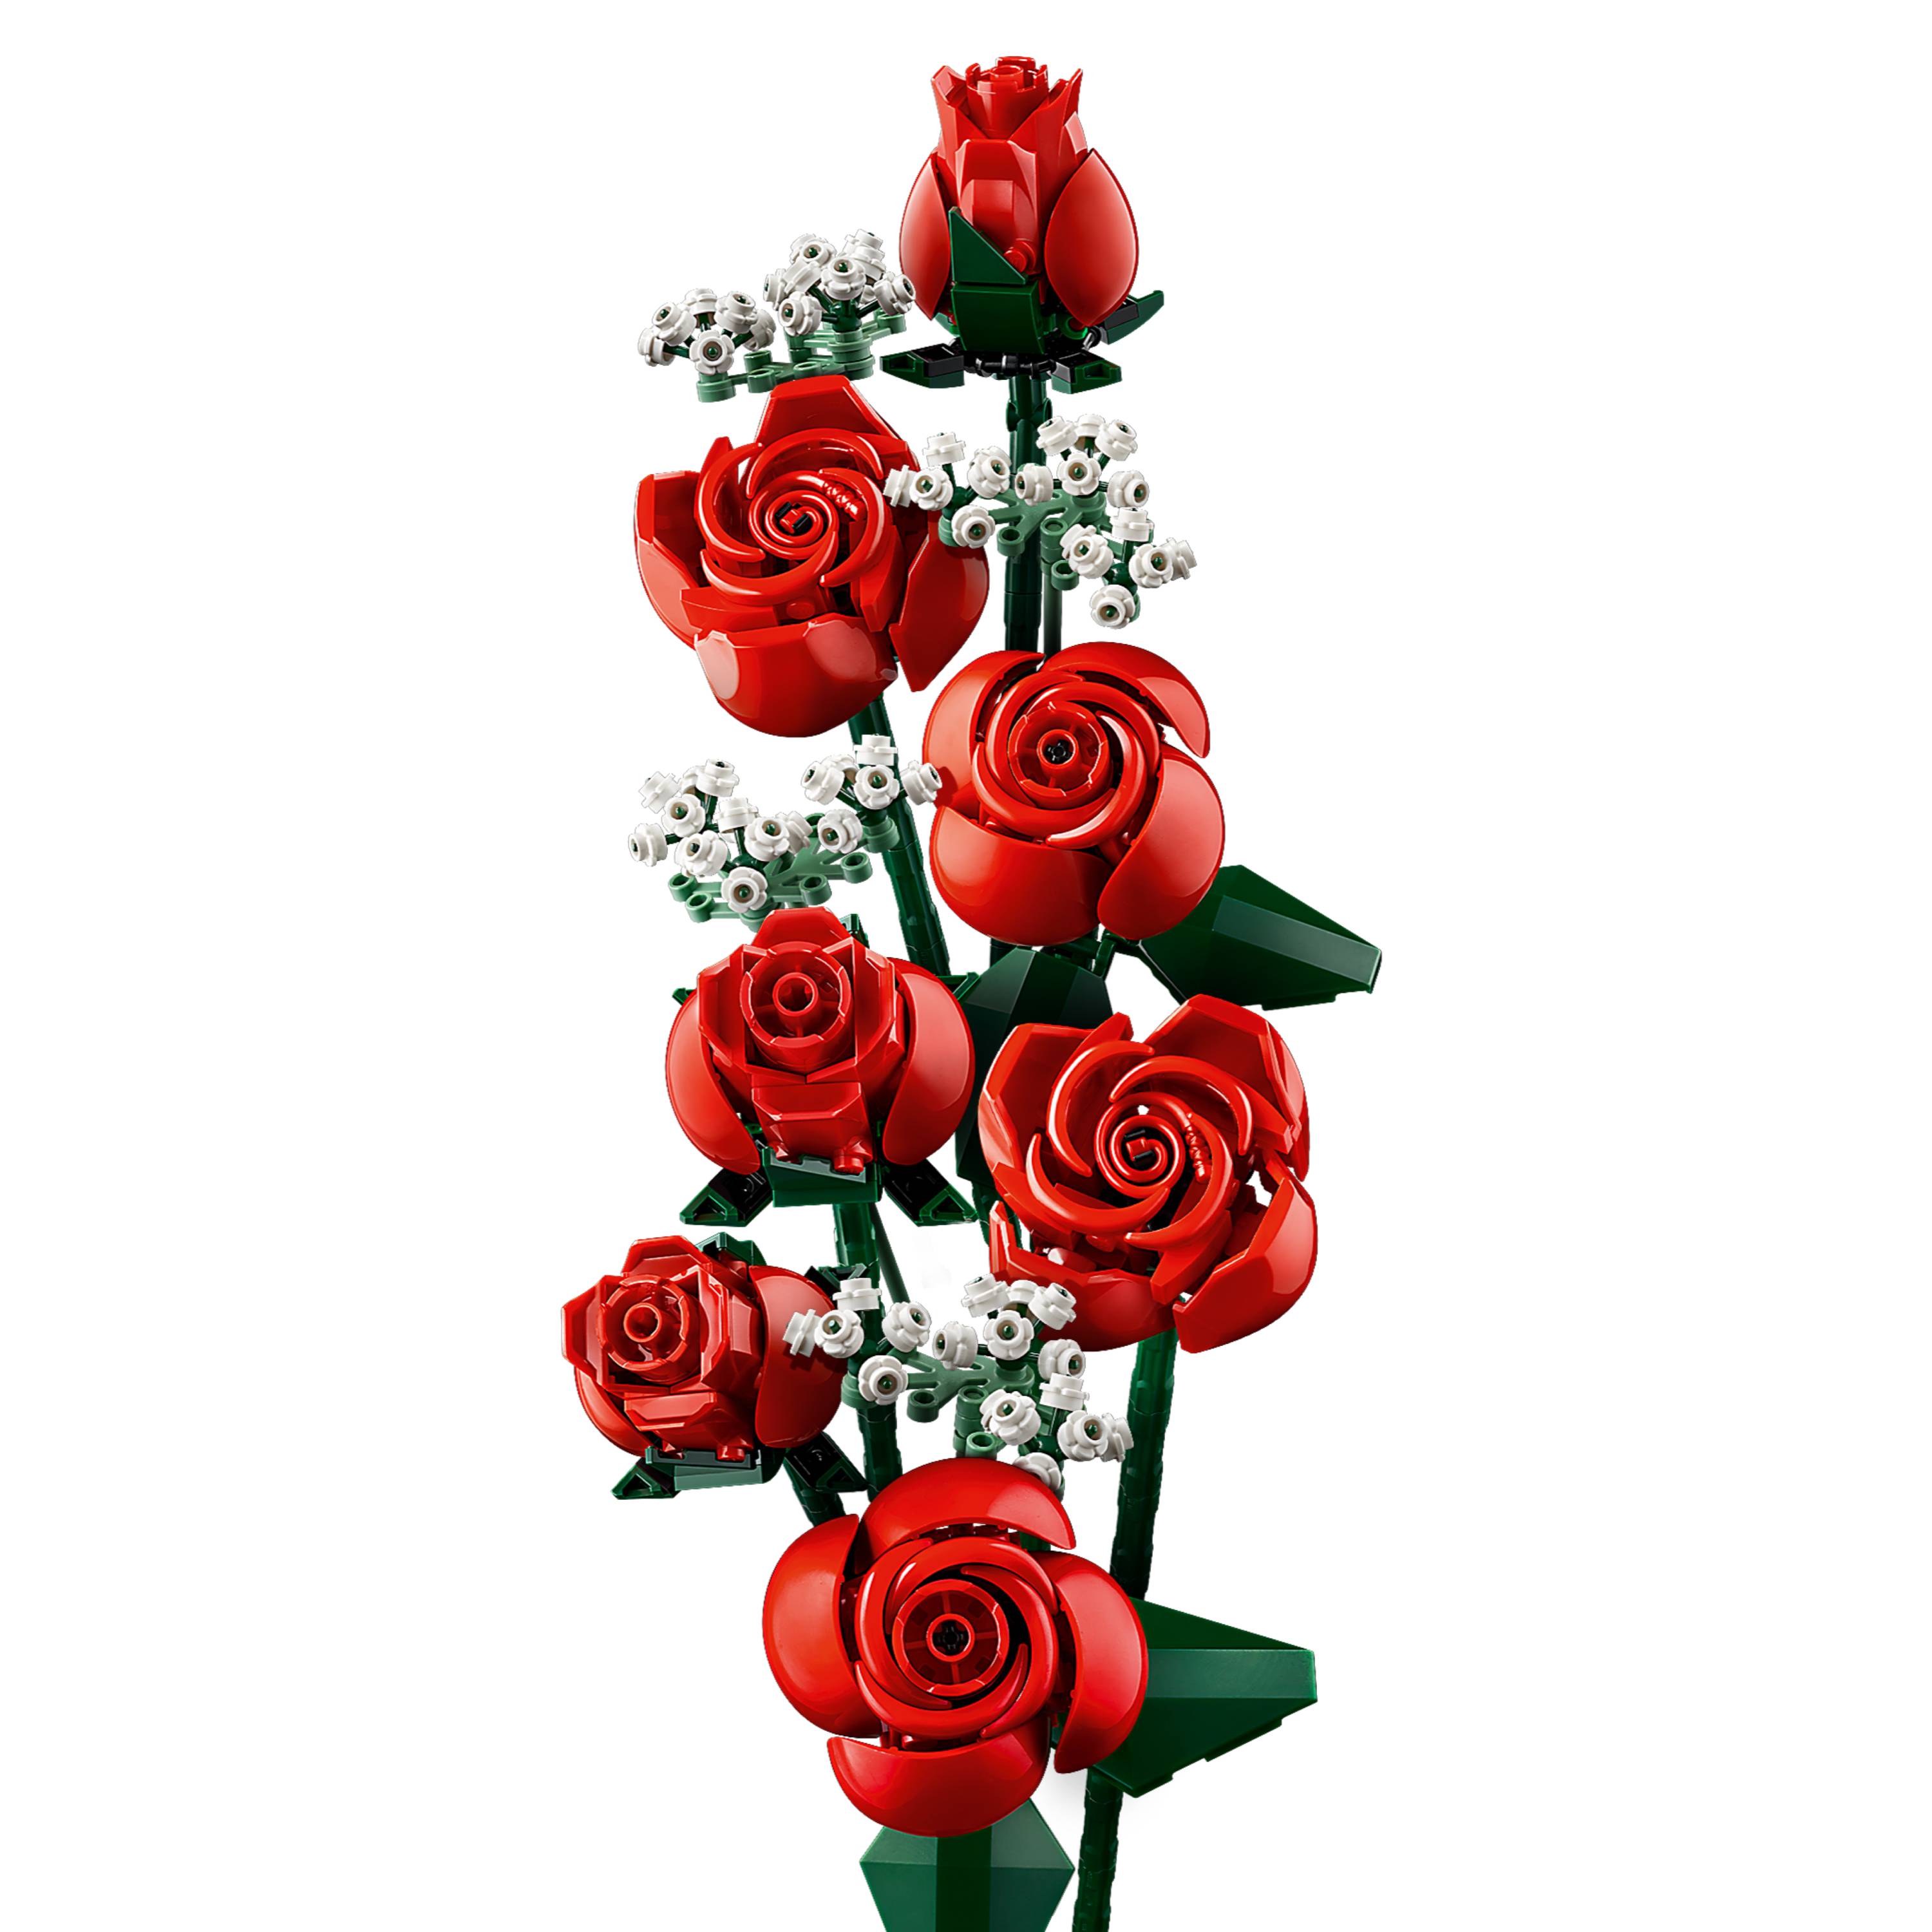 Ramo de rosas. LEGO 10328